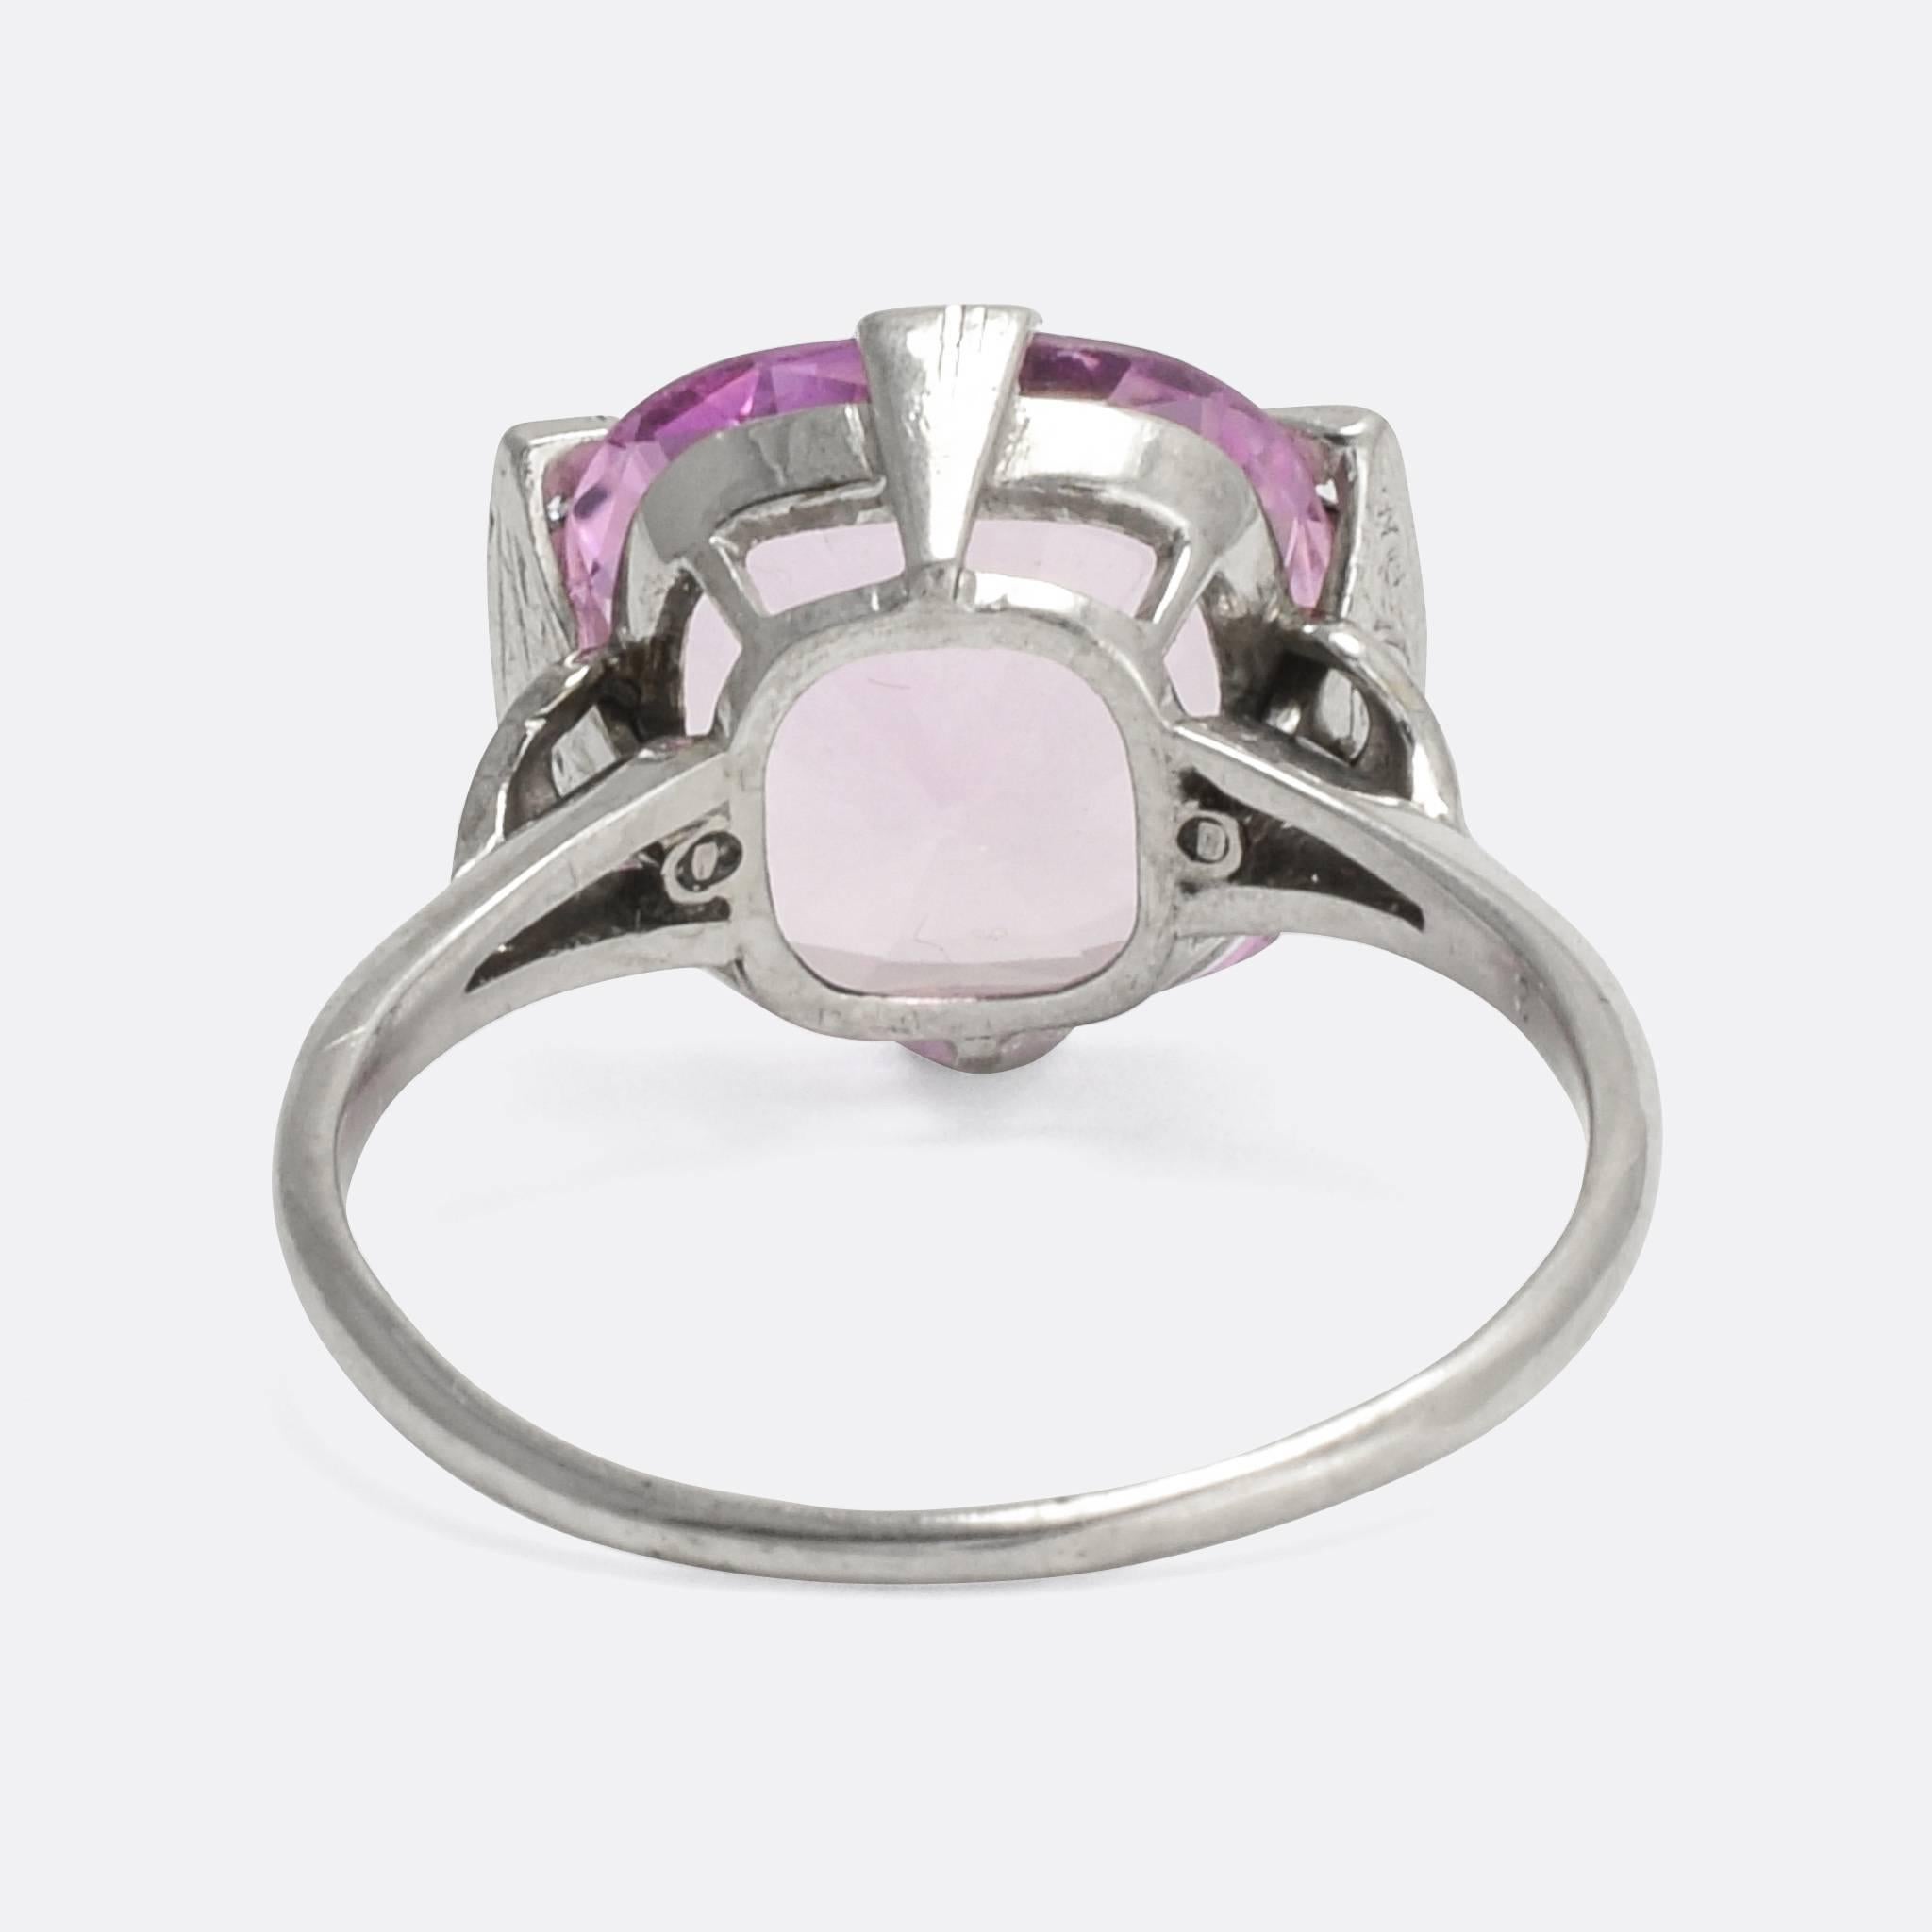 Women's 1920s Art Deco Pink Topaz Diamond Cocktail Ring